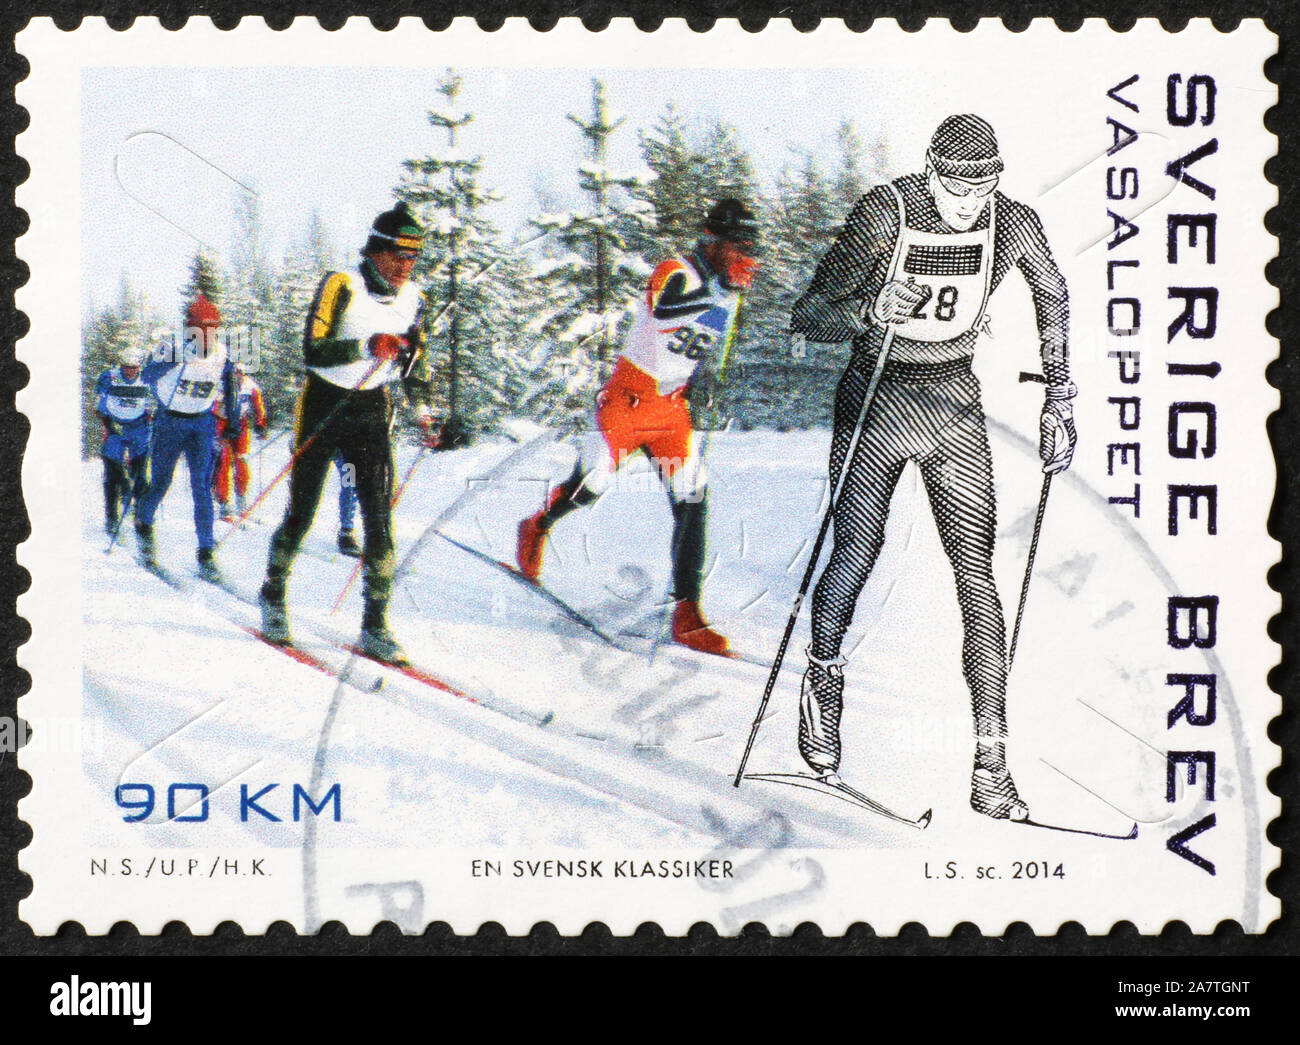 Cross-country ski race Vasaloppet on swedish stamp Stock Photo